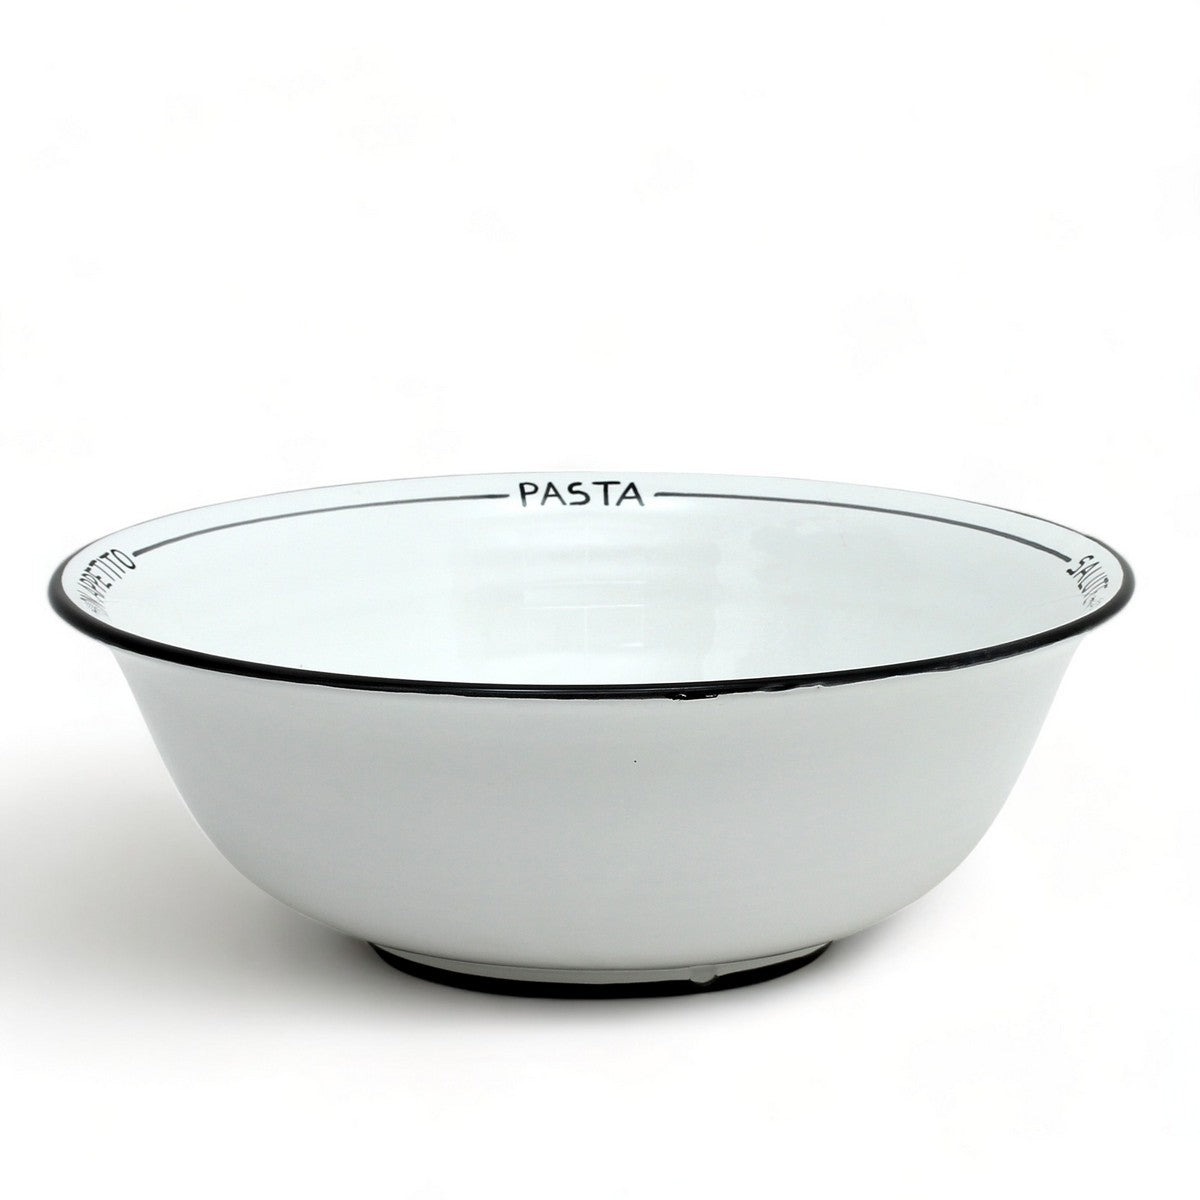 POSATA NERO: Large Pasta Bowl